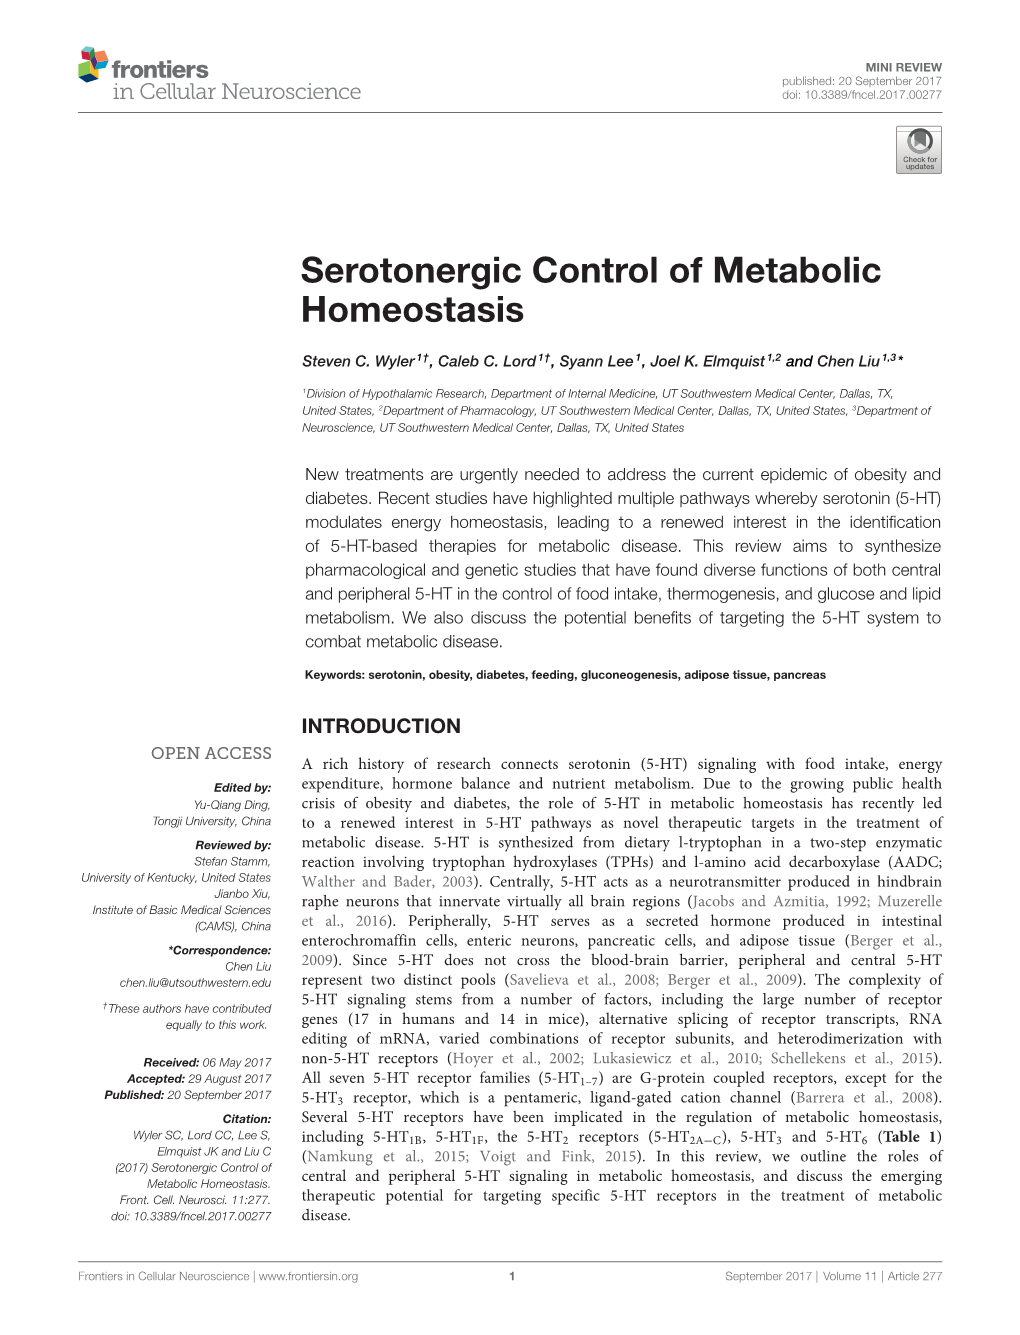 Serotonergic Control of Metabolic Homeostasis